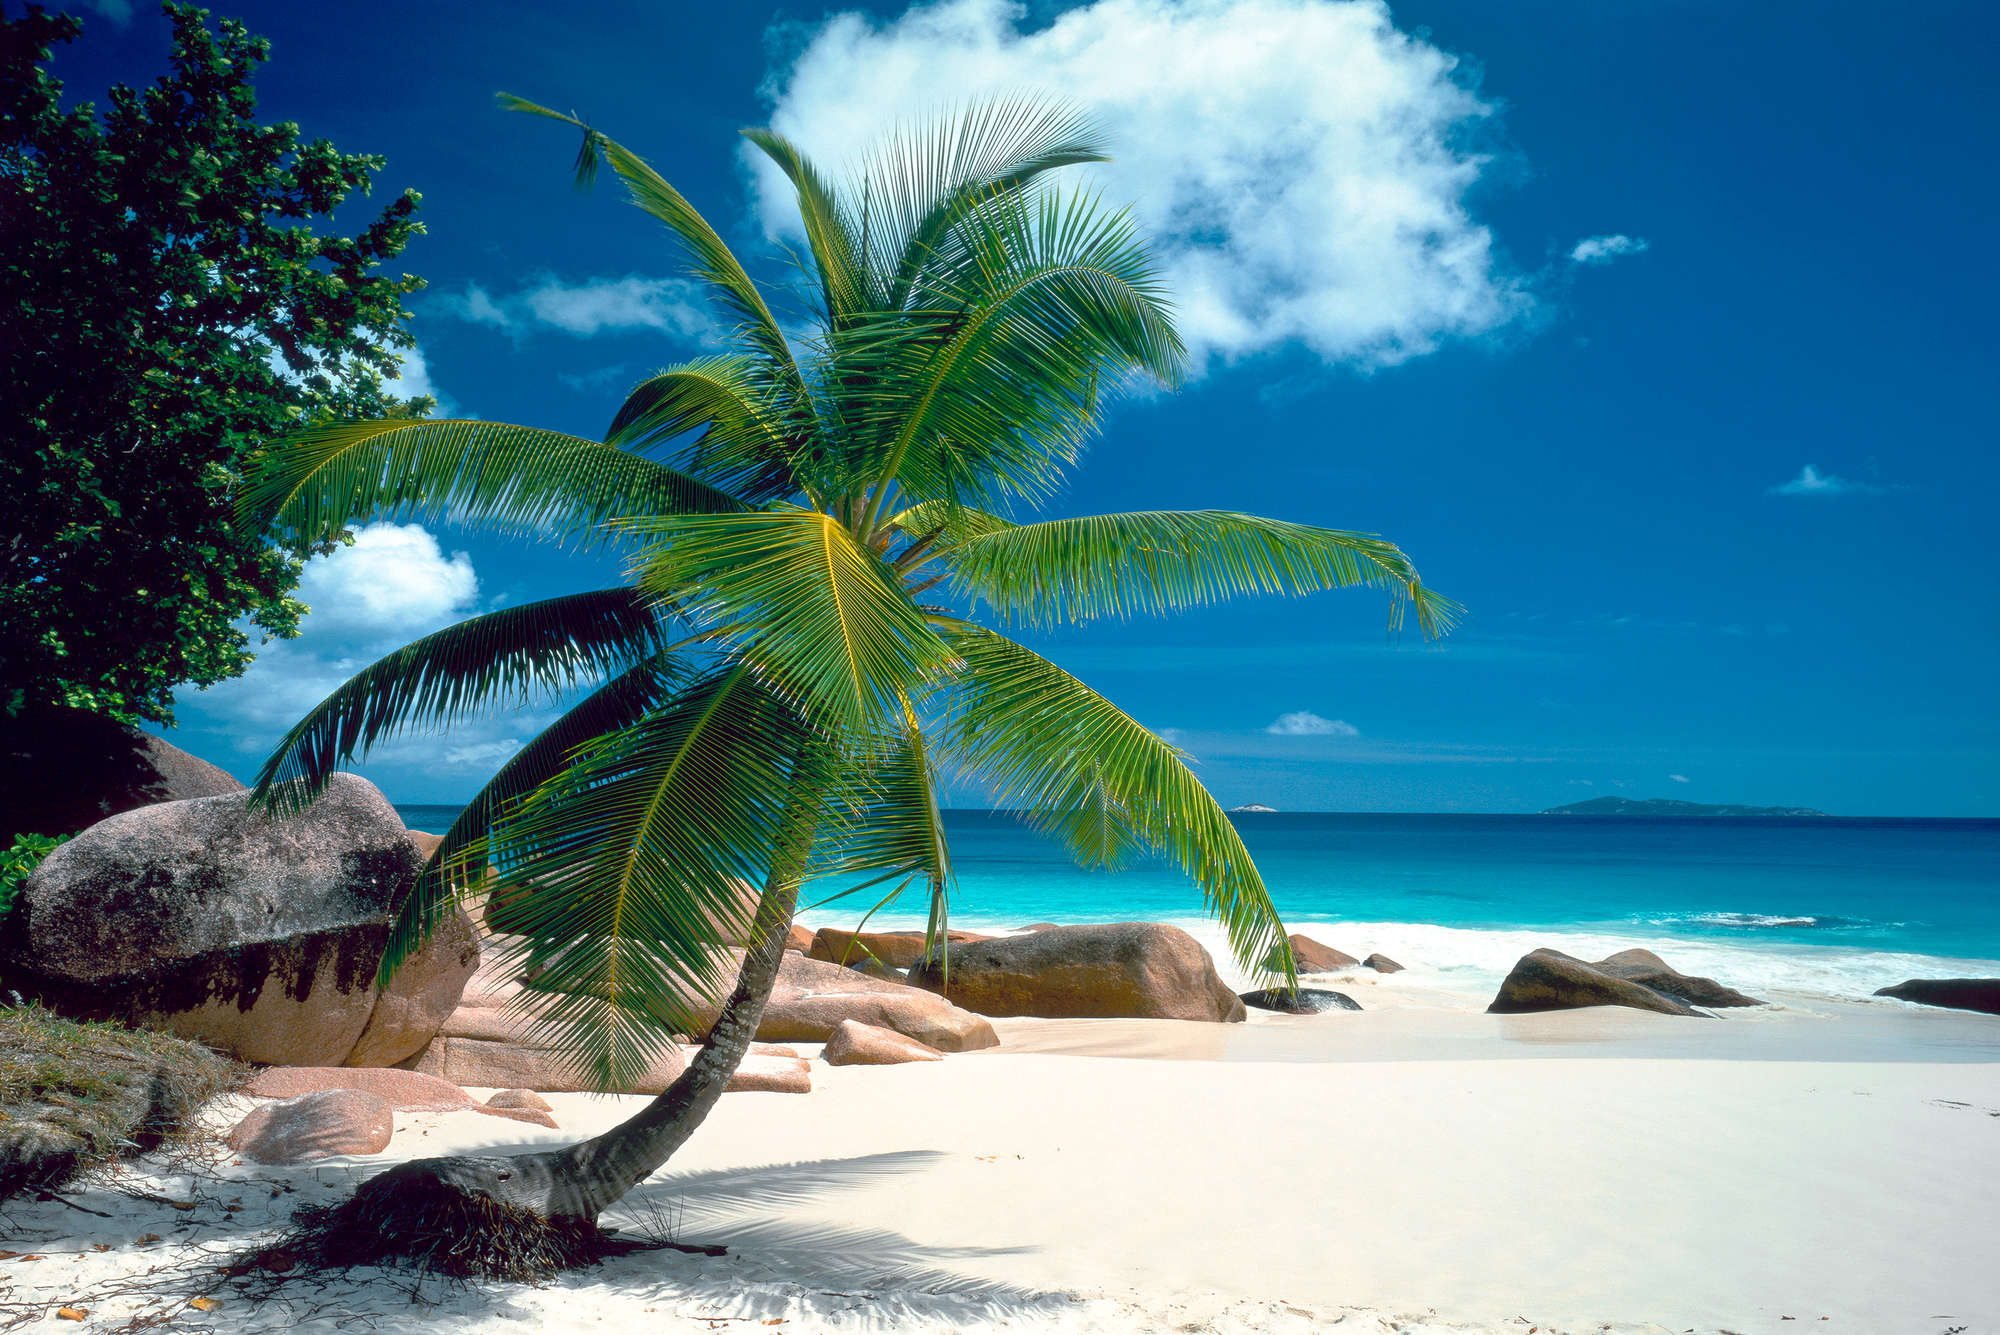             Strand Fototapete Palme mit blauem Meer auf Perlmutt Glattvlies
        